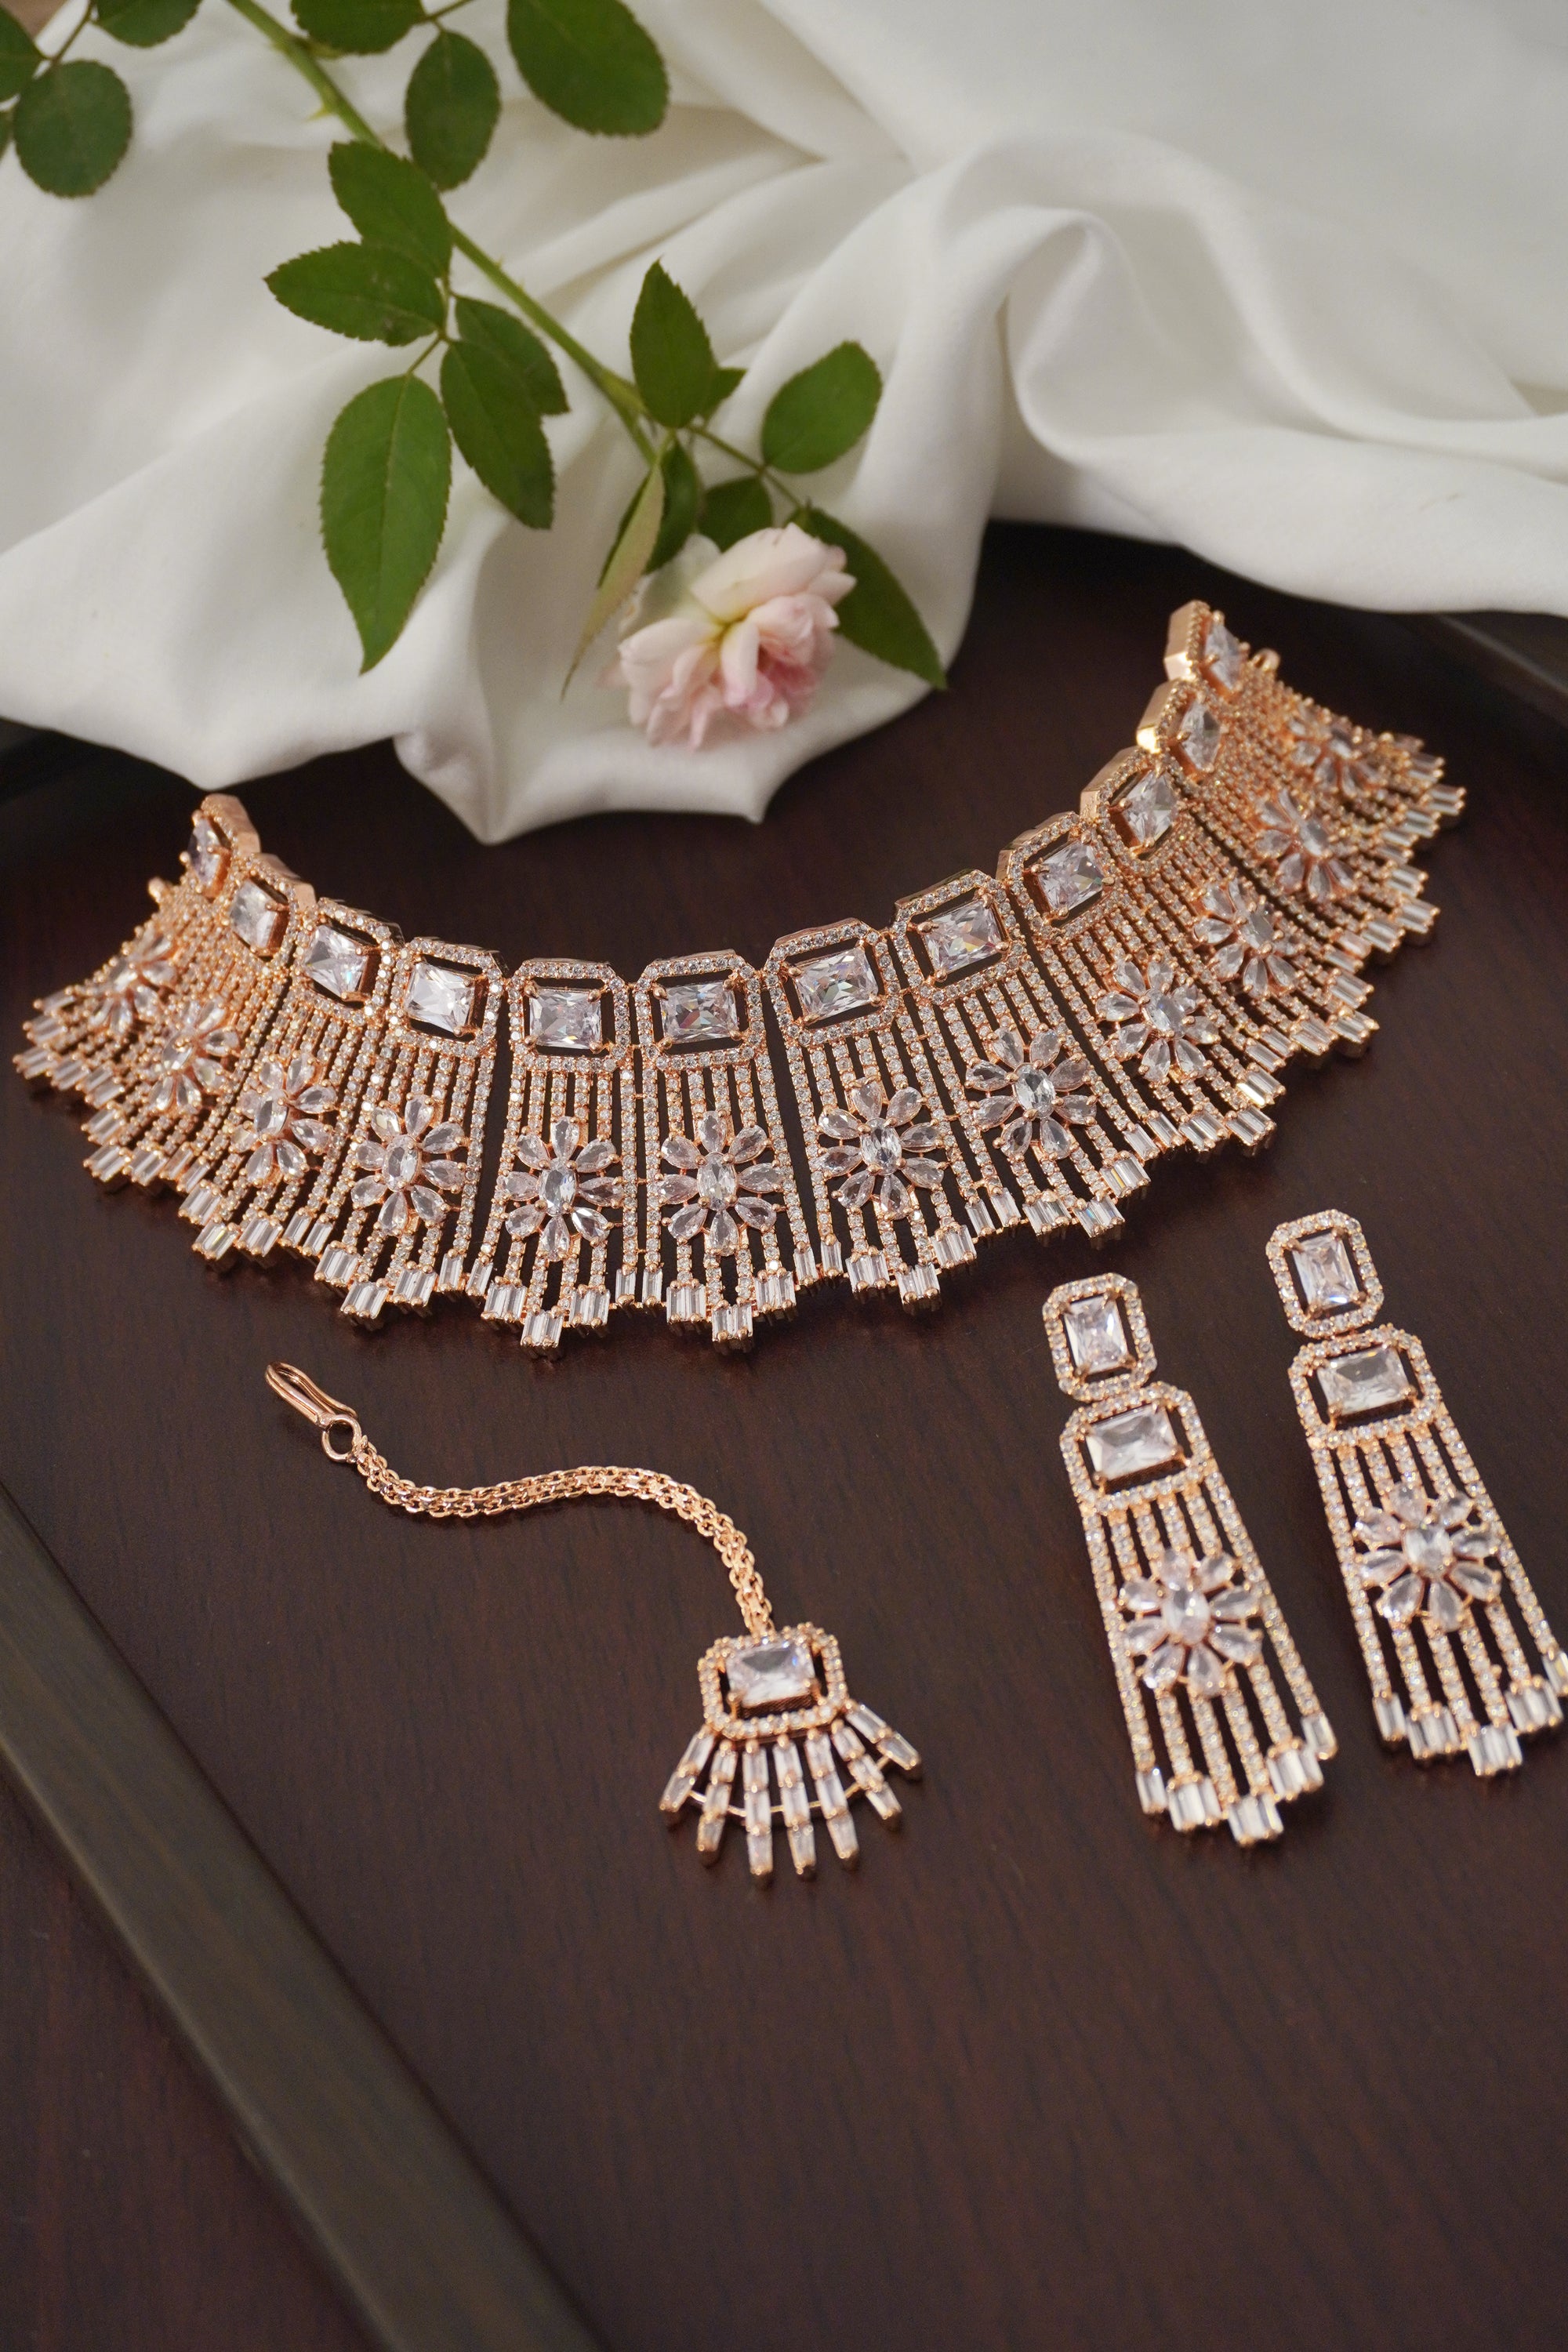 Rose gold American diamond necklace set